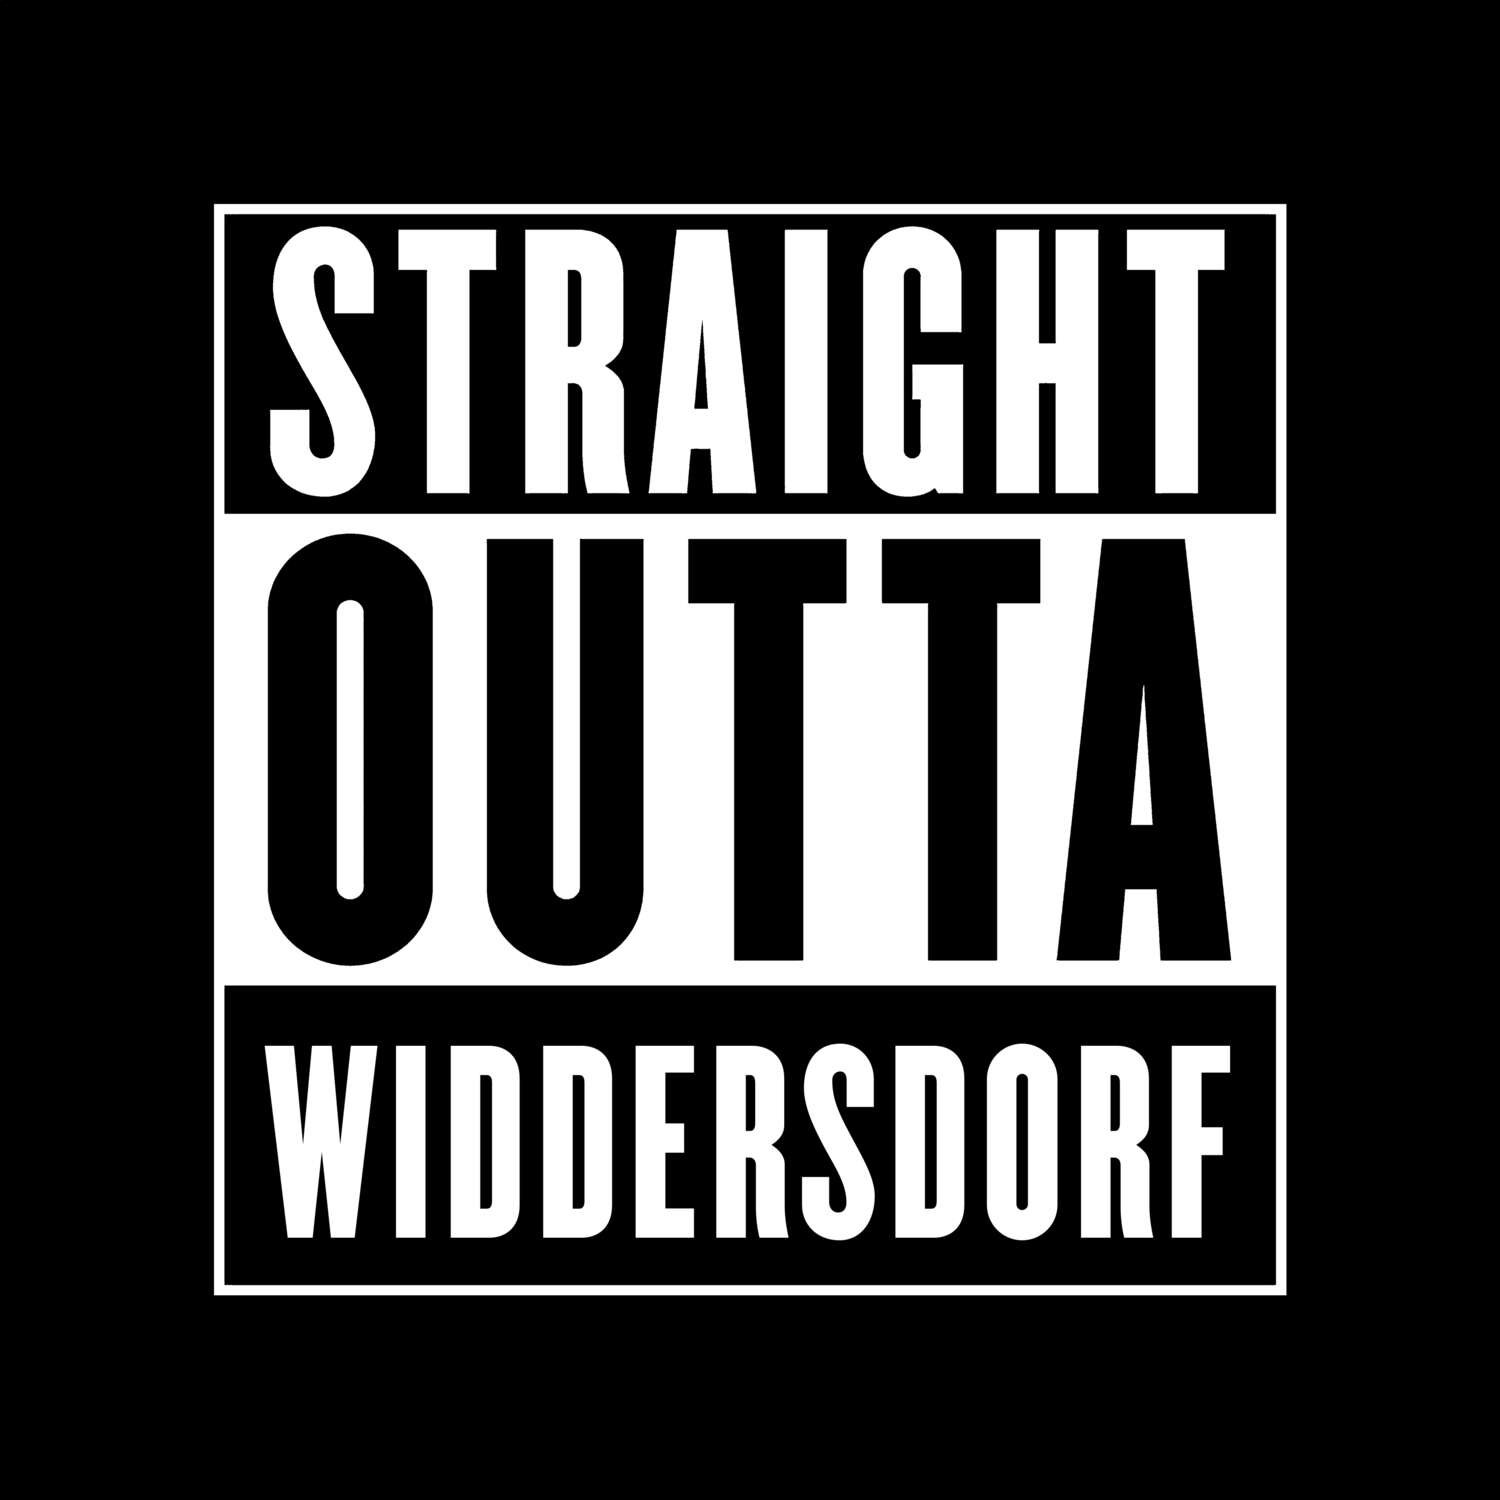 Widdersdorf T-Shirt »Straight Outta«